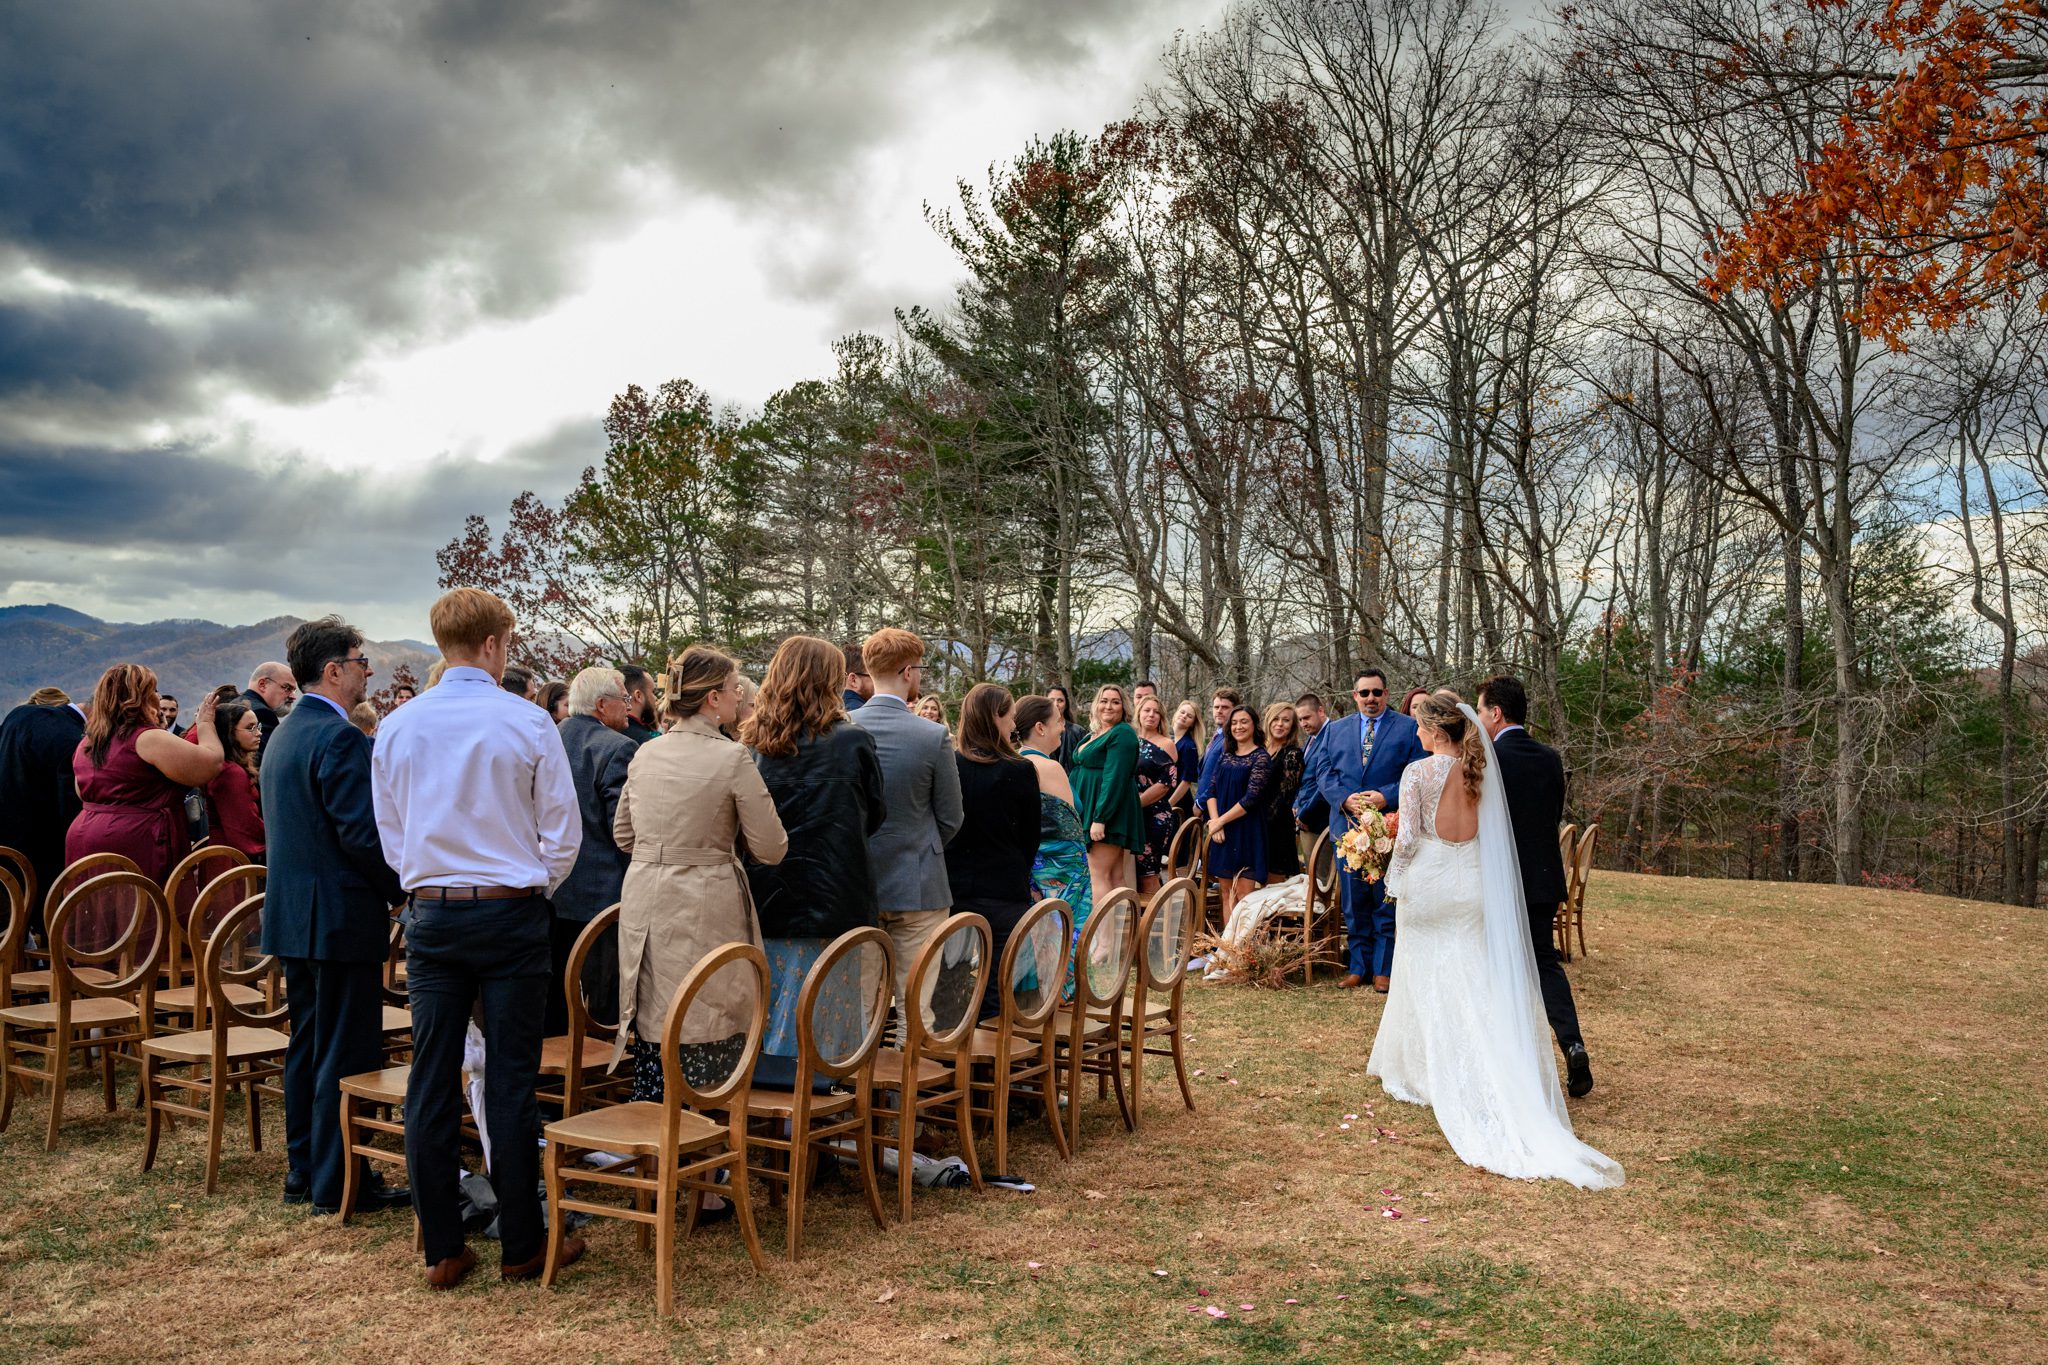 emotion filled wedding ceremony at the ridge asheville